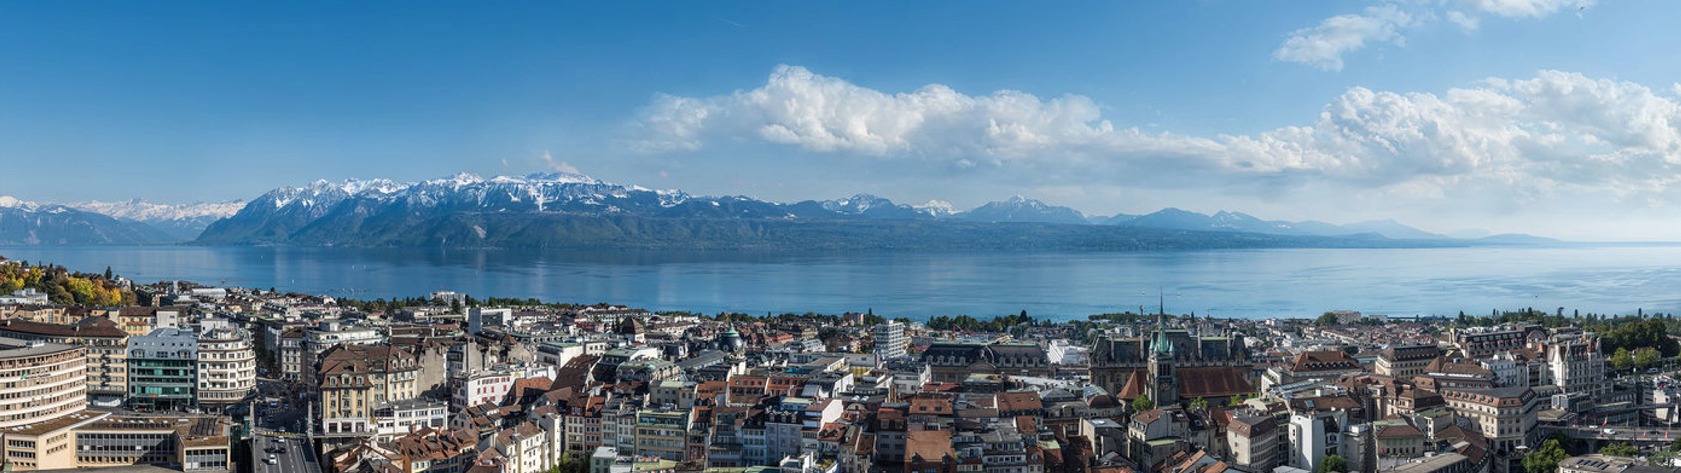 marche immobilier suisse 2022 2023